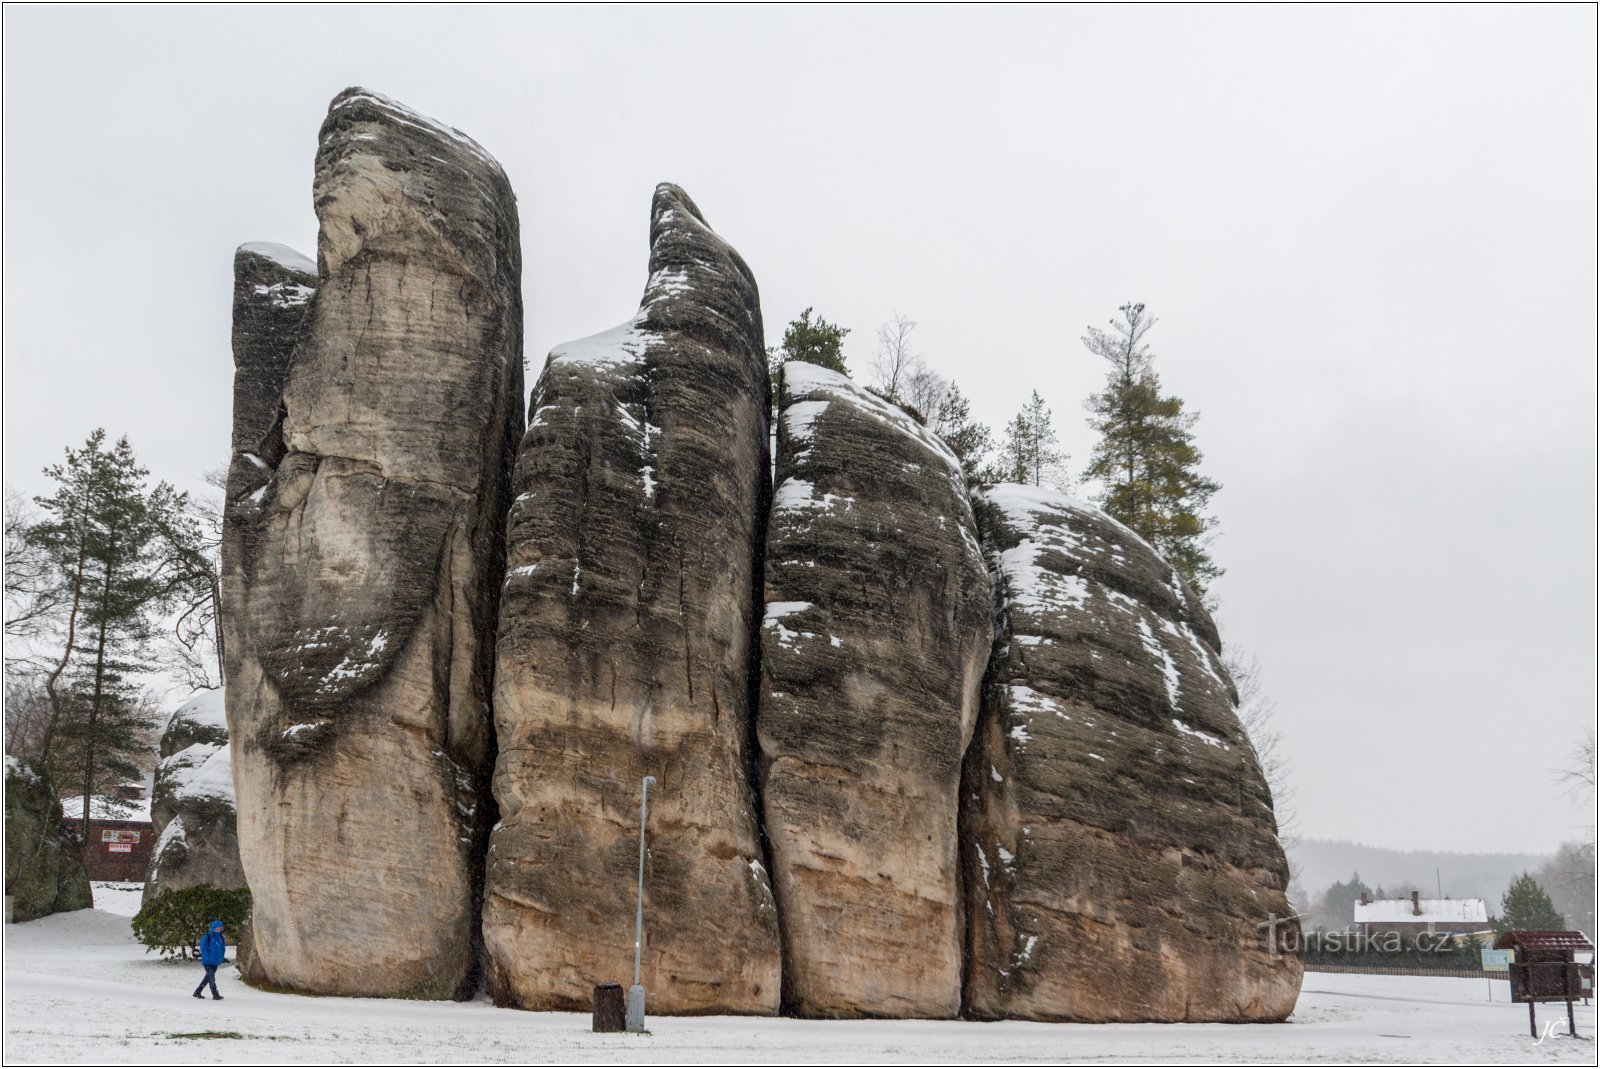 Winter Adrspaš rocks